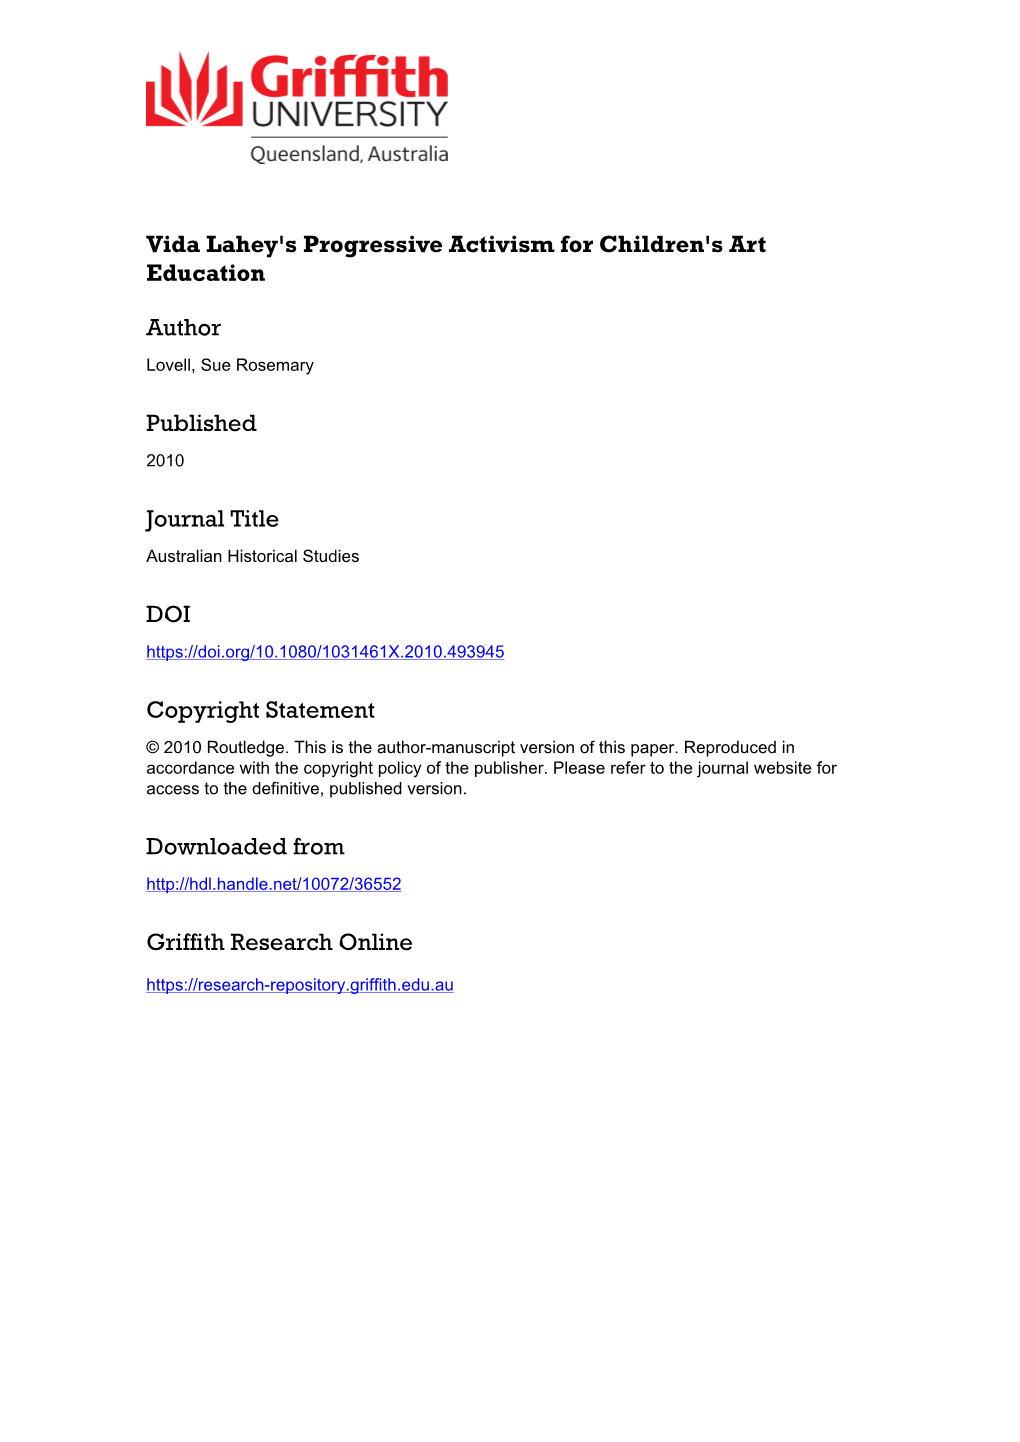 Vida Lahey's Progressive Activism for Children's Art Education